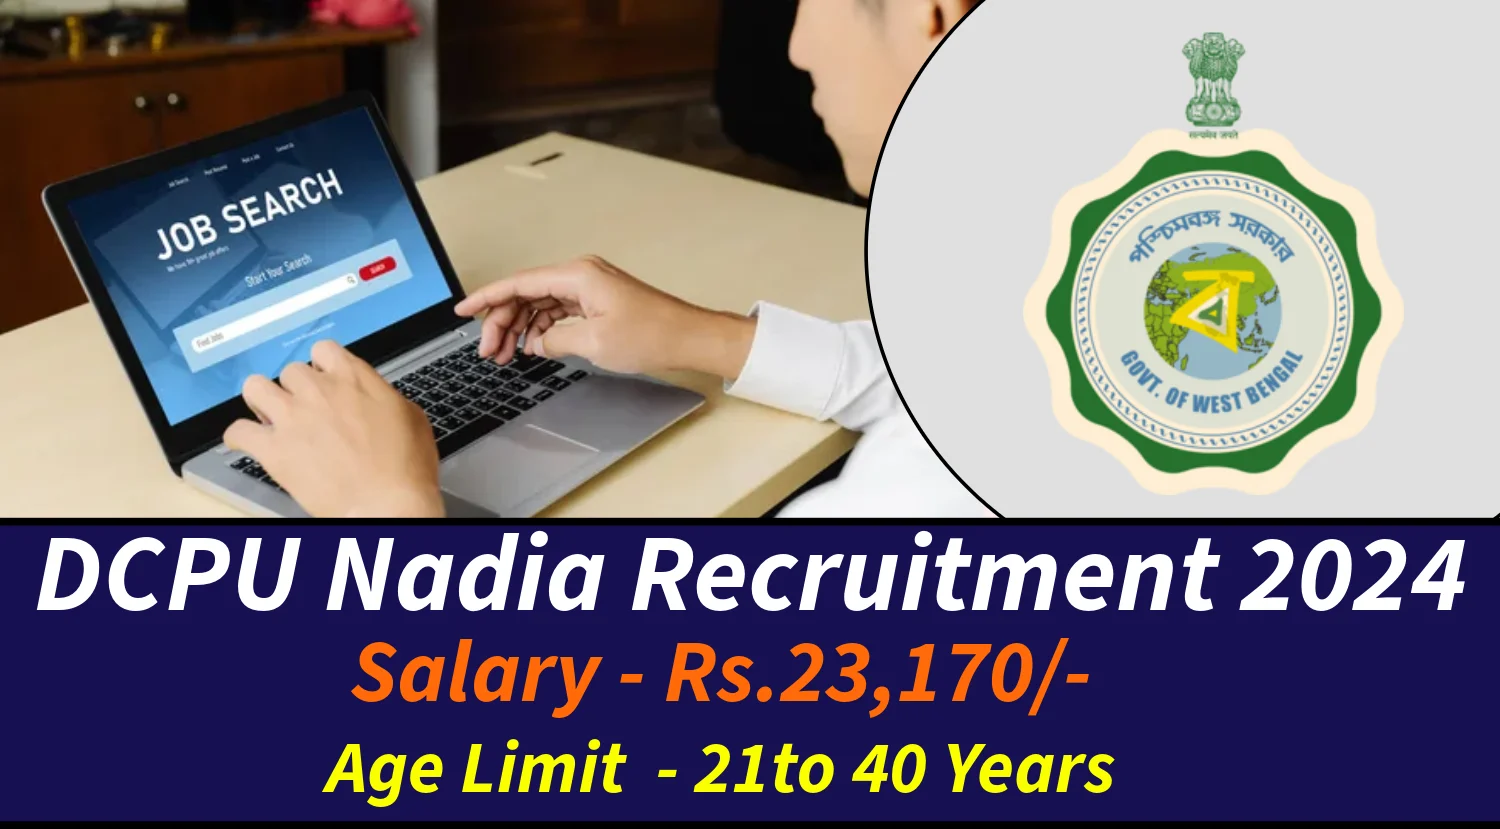 DCPU Nadia Recruitment 2024 Notification out